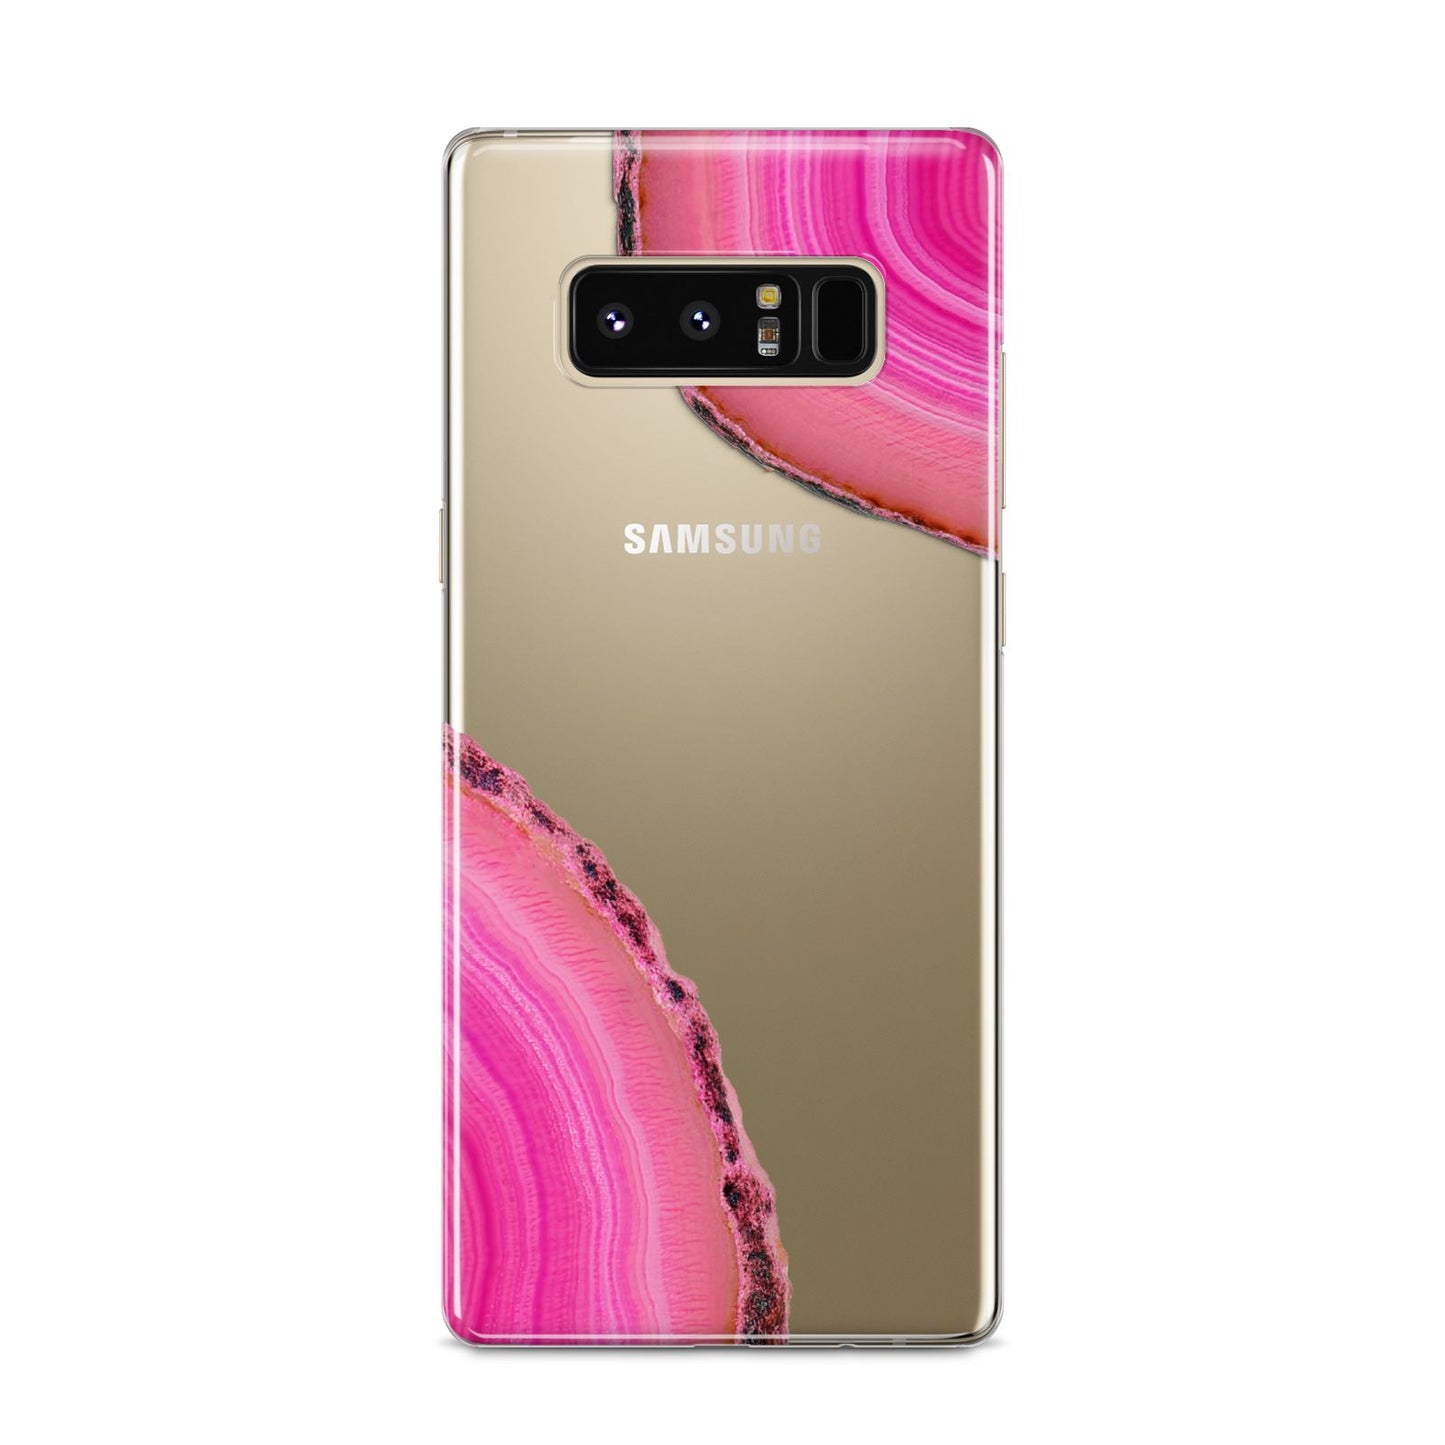 Agate Bright Pink Samsung Galaxy S8 Case